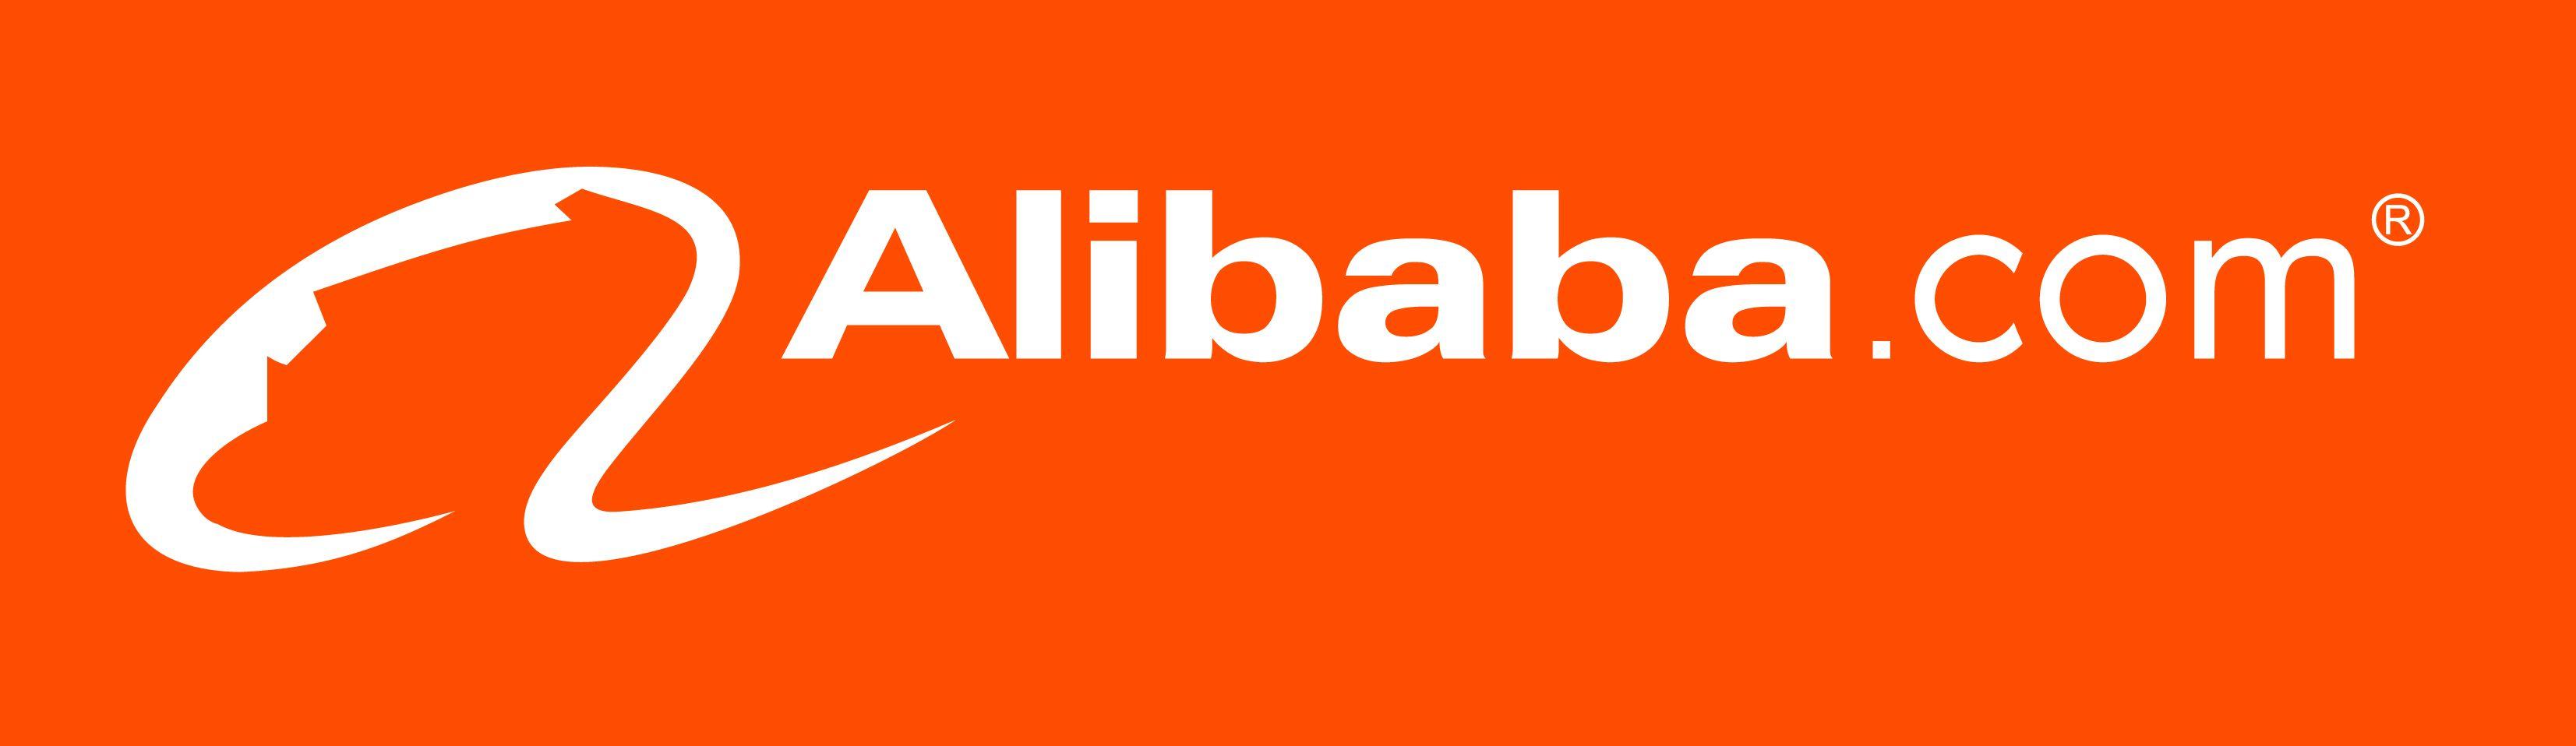 Alibaba.com Logo - 10 Crazy Things You Can Buy On Alibaba.com